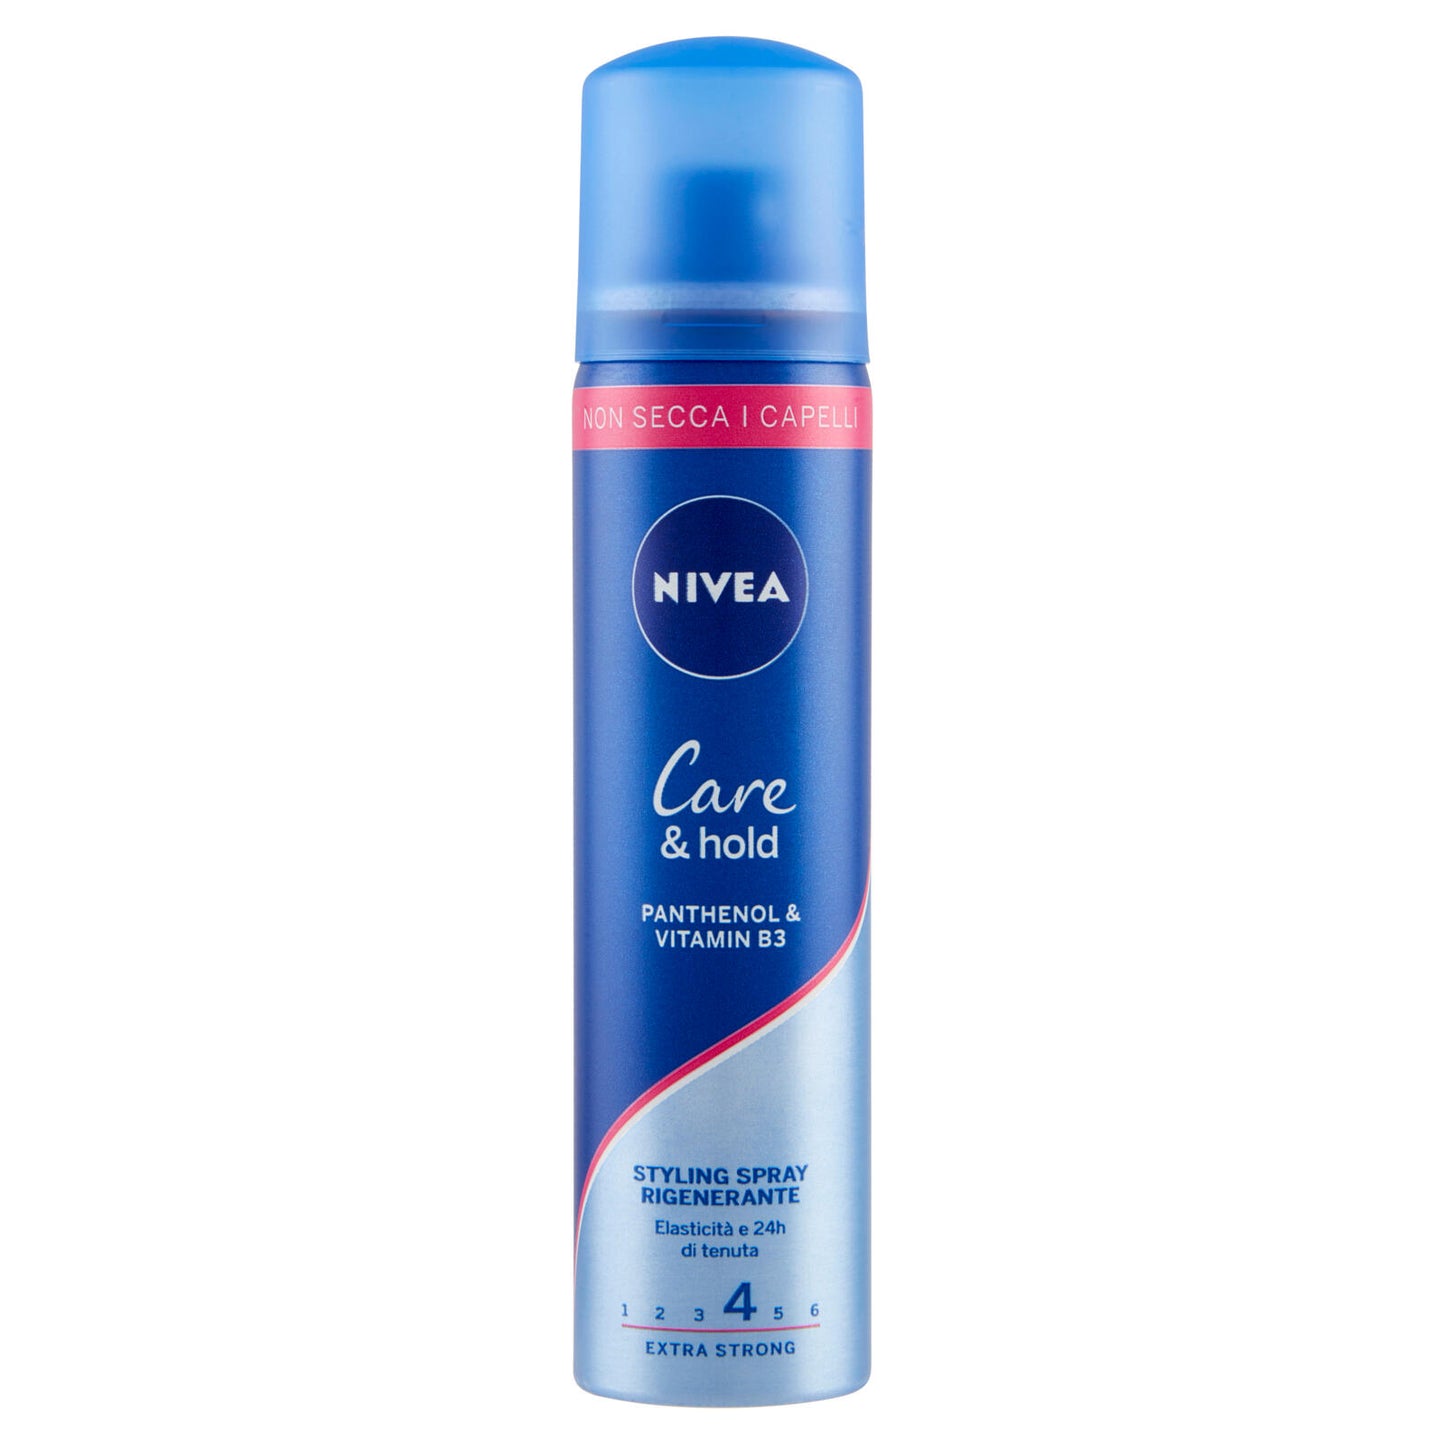 Nivea Care & hold Styling Spray Rigenerante 75 ml